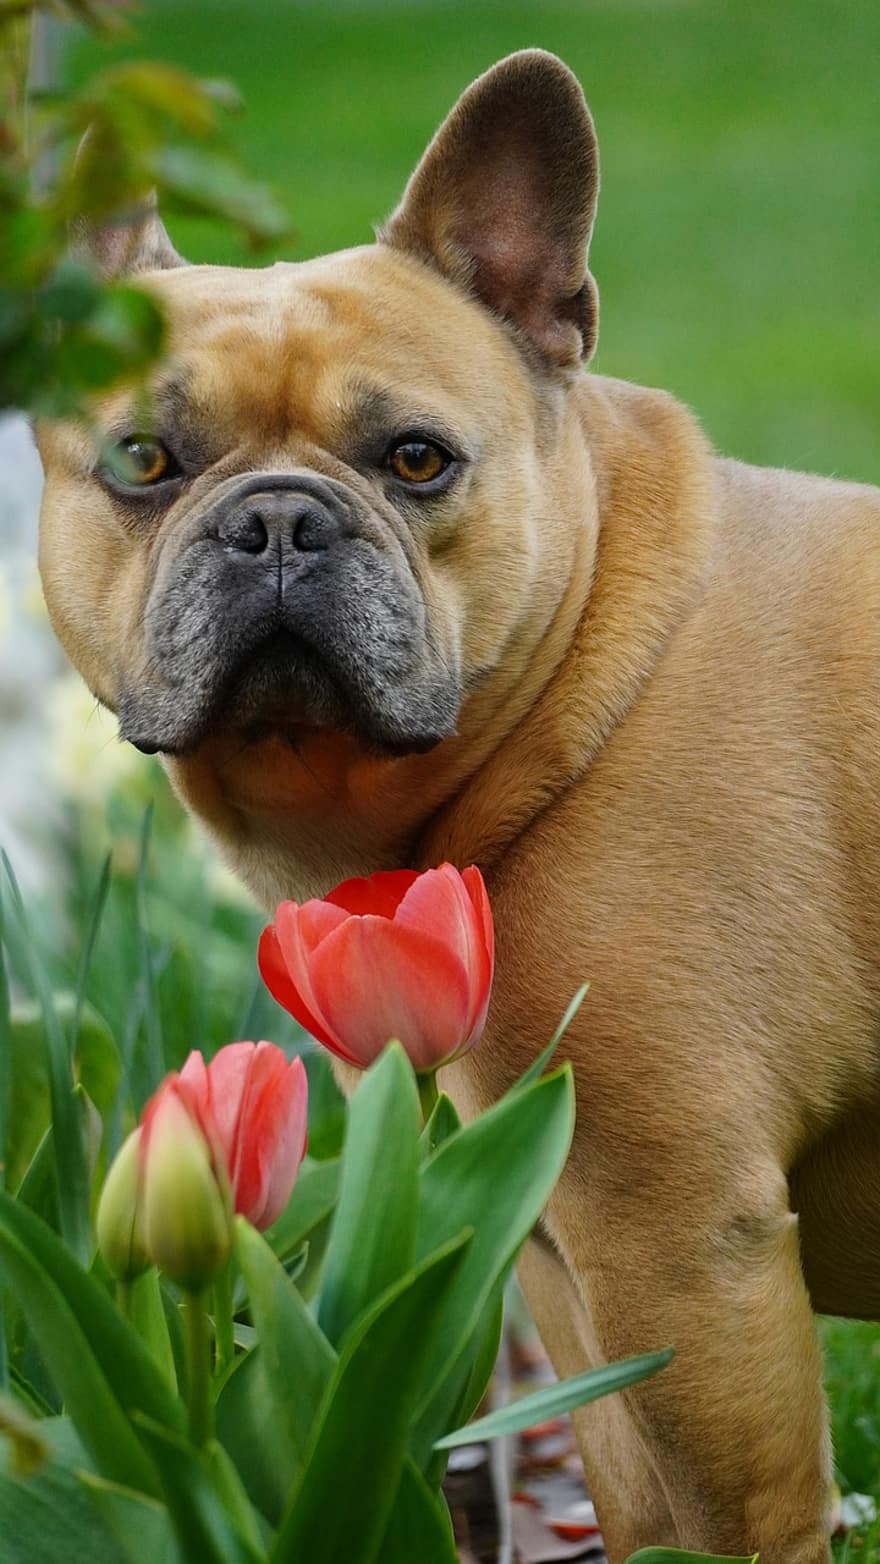 bulldog francès, jardí, tulipes, gos, primavera, animals domèstics, animal, naturalesa, paisatge, pati posterior, mascota